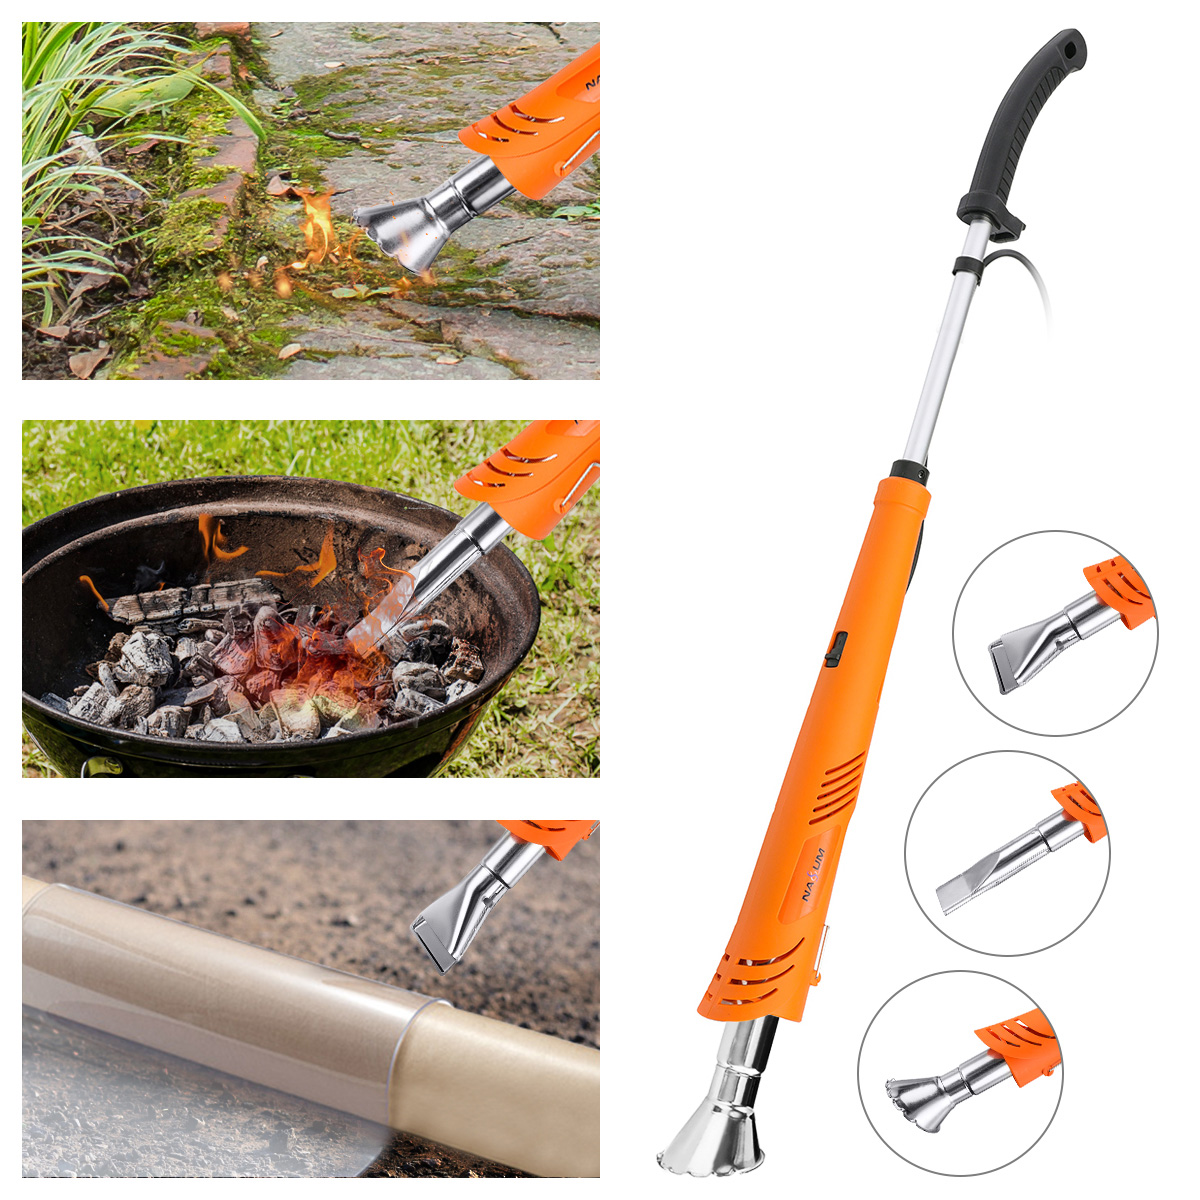 Electric-Weed-Burner-Garden-Gear-Weed-Killer-Lawn-Wand-Torch-Tools-2000W-230V-UK-Plug-1695567